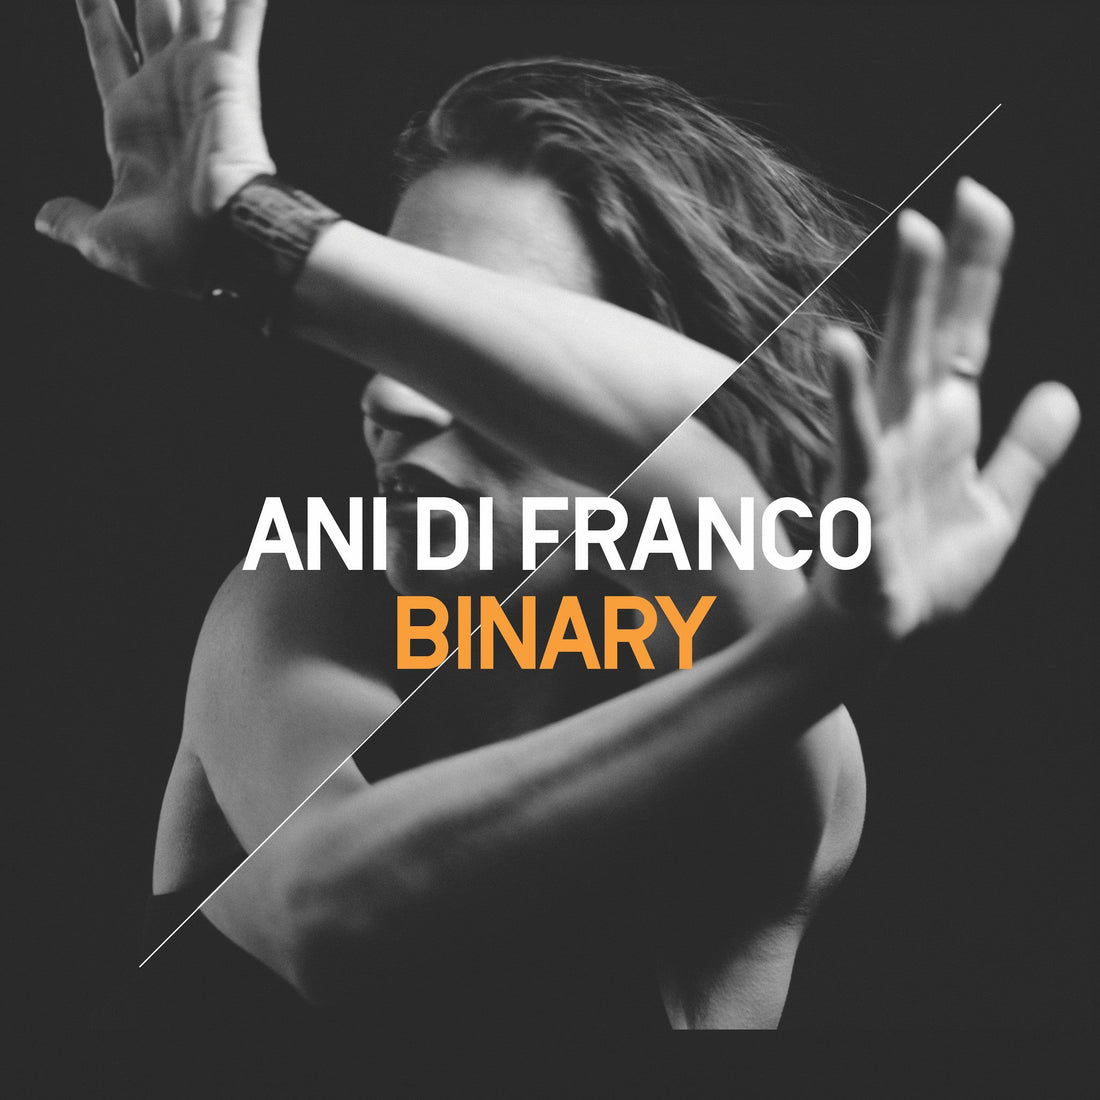 New Album 'Binary' coming June 9 - Pre-Order on PledgeMusic today!